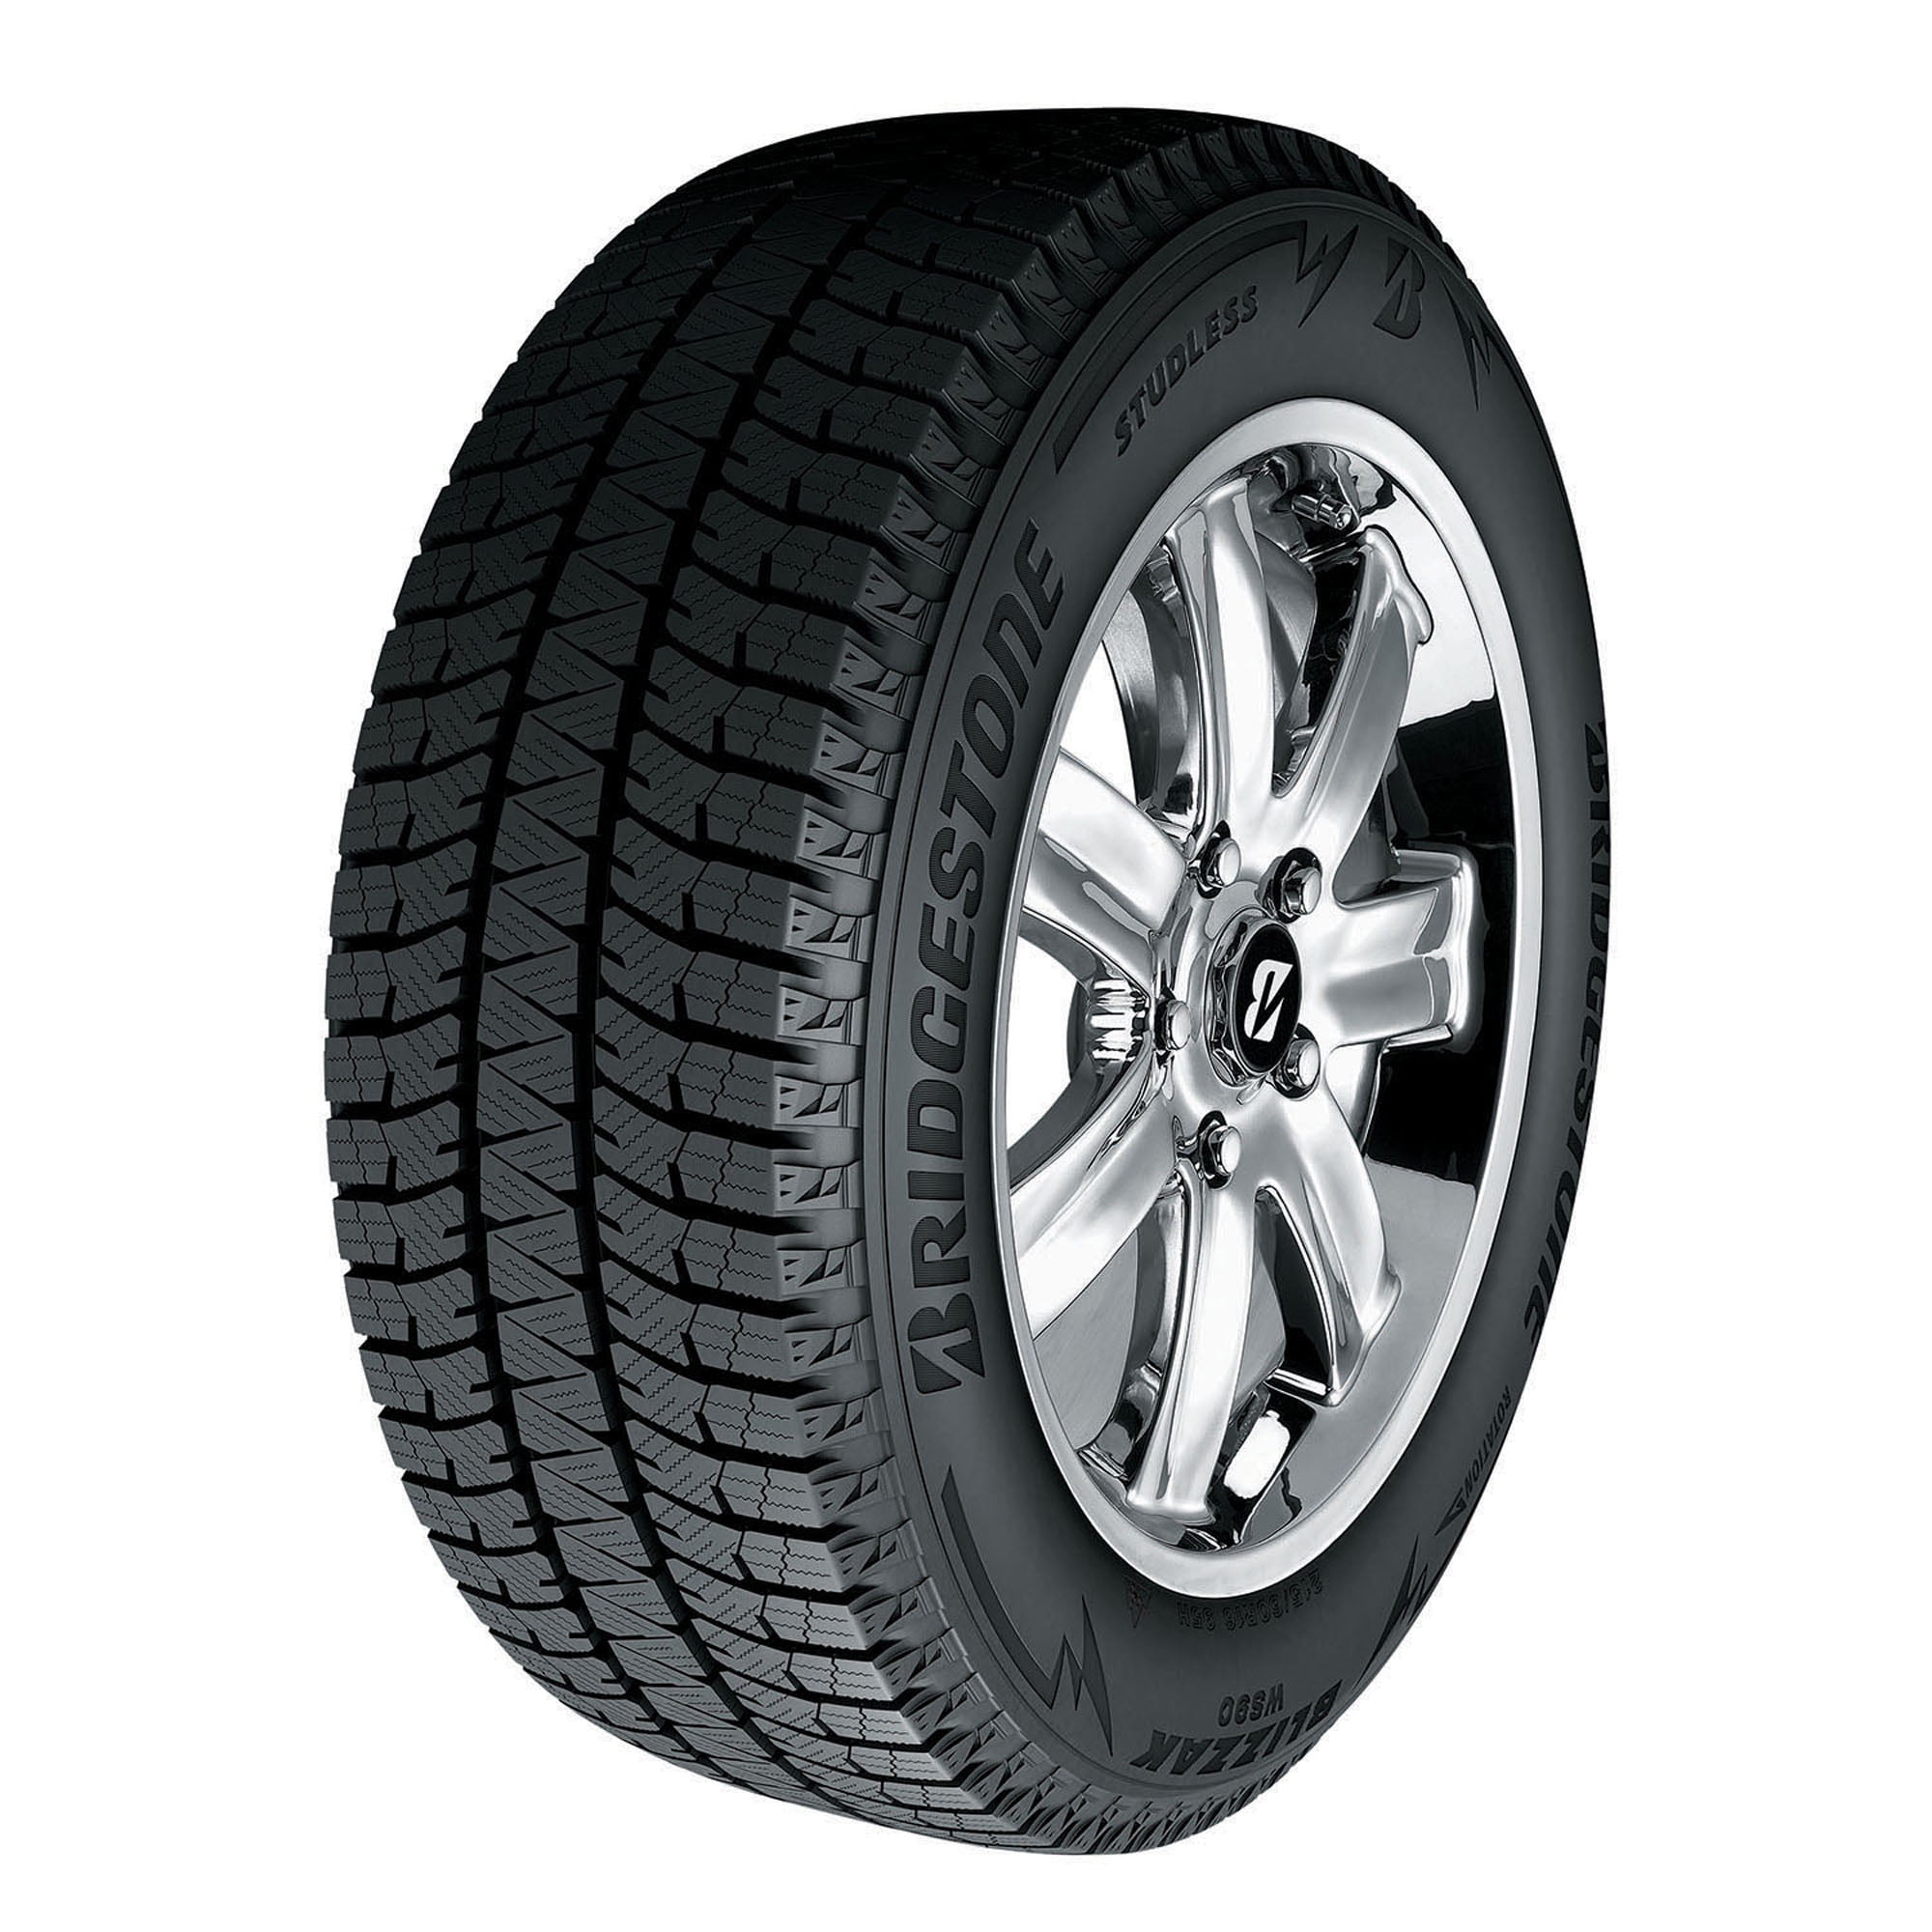 Bridgestone Blizzak WS90 Winter 245/40R18 97H XL Passenger Tire